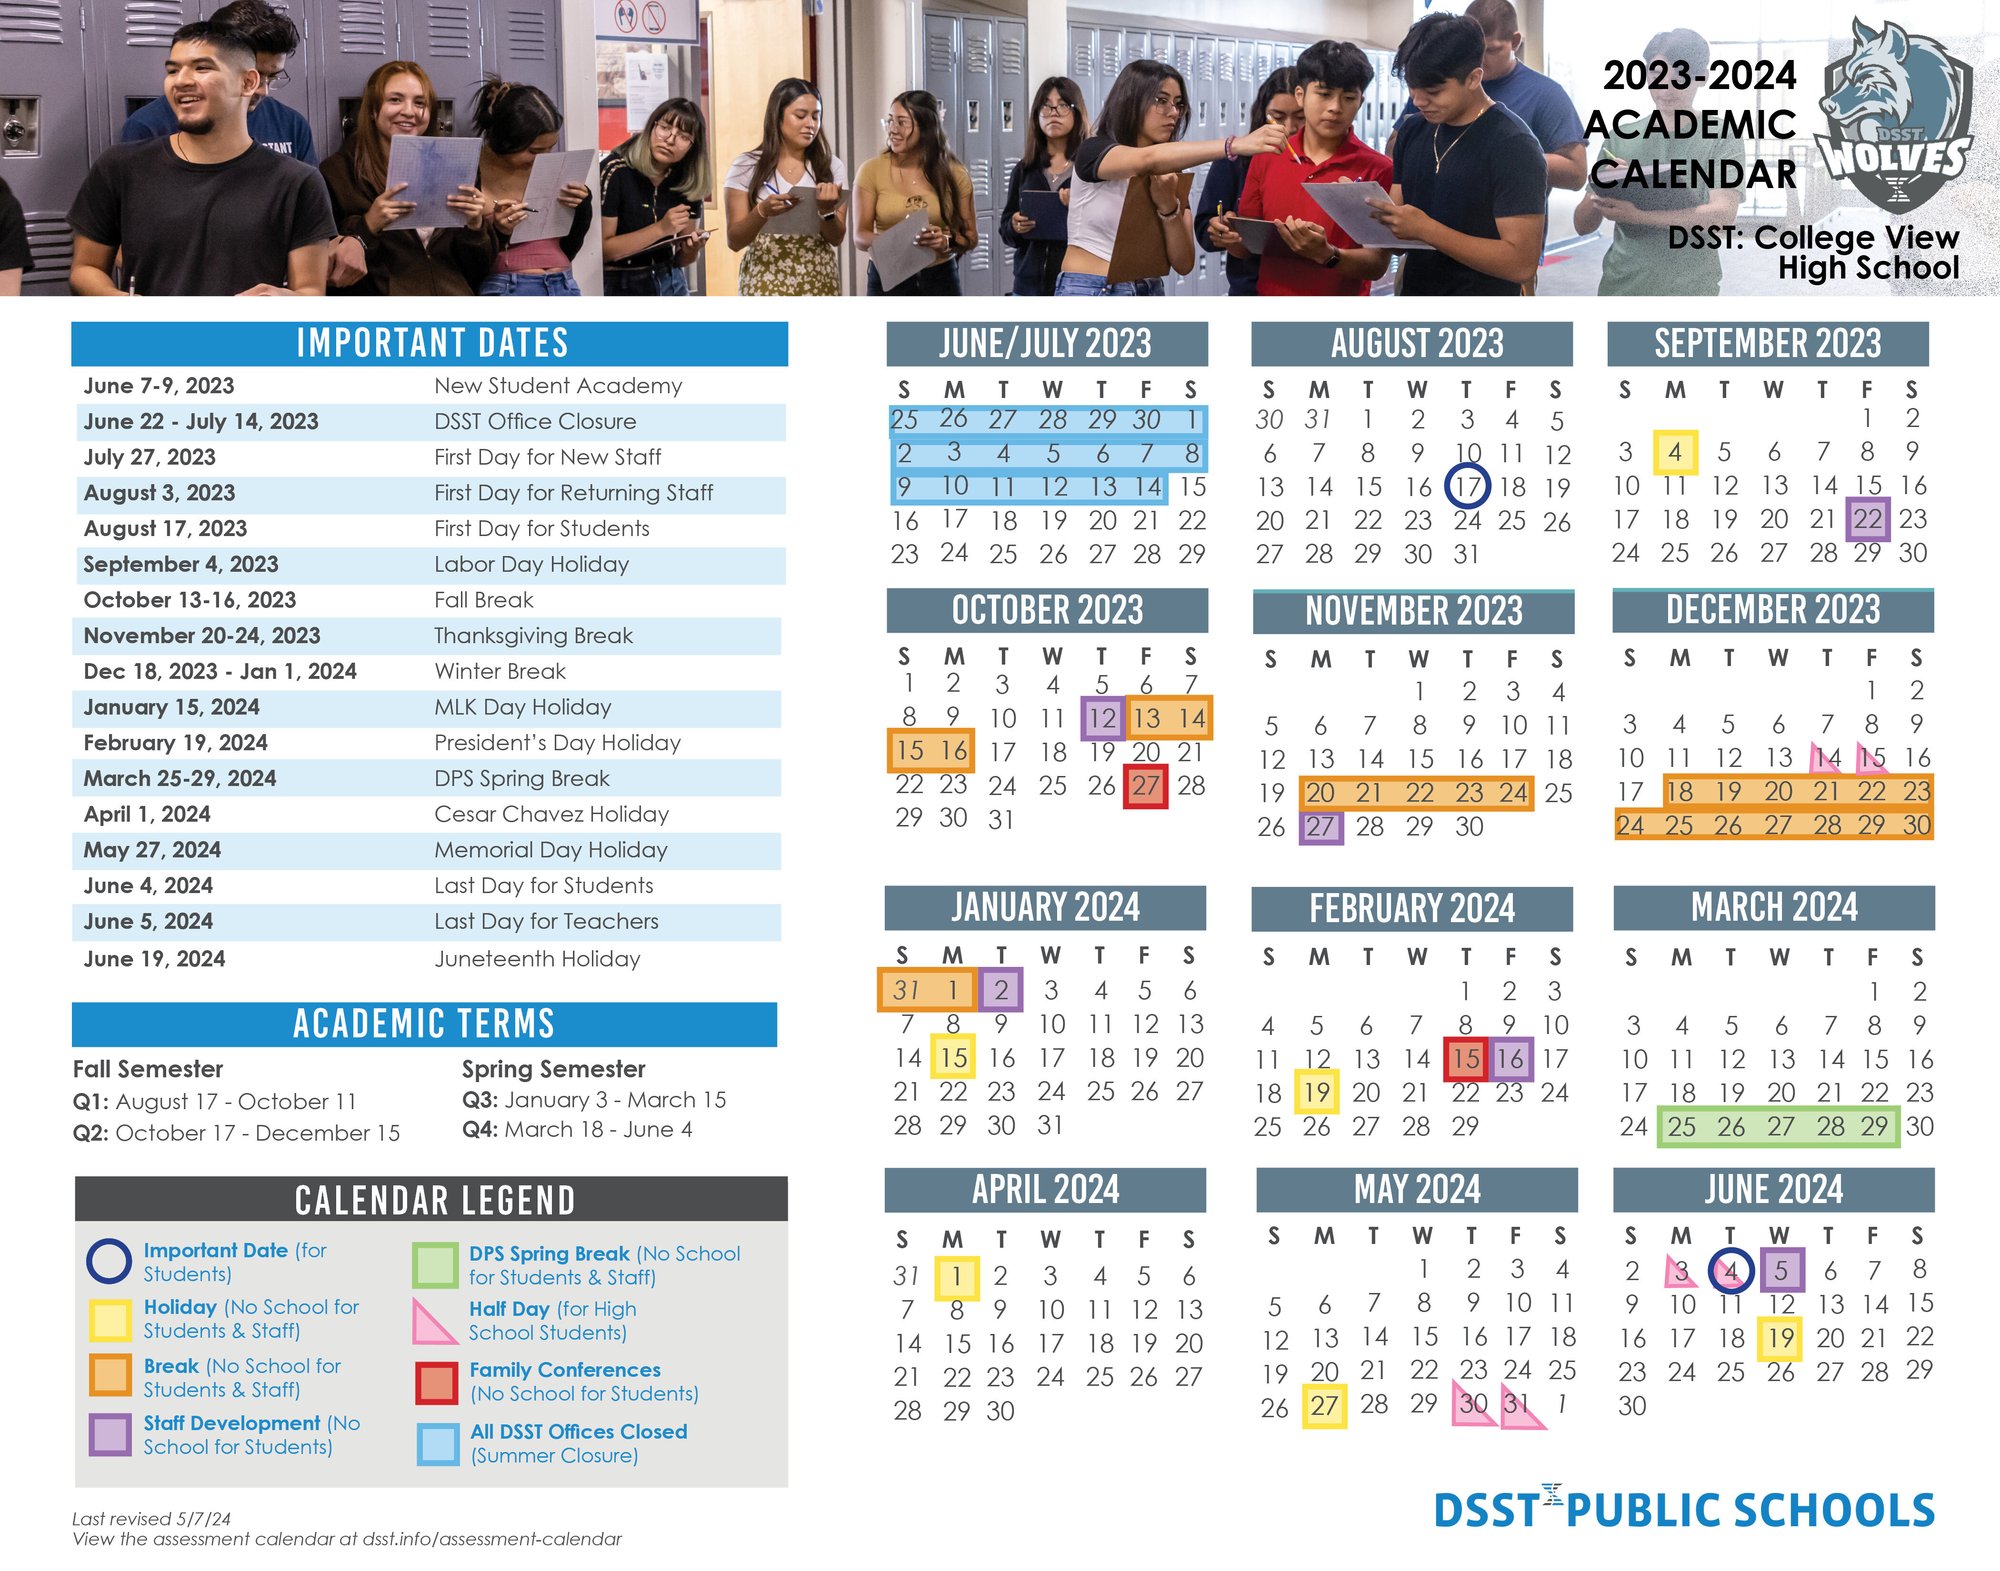 CV HS Calendar 23-24 English and Spanish updated 5.7.24